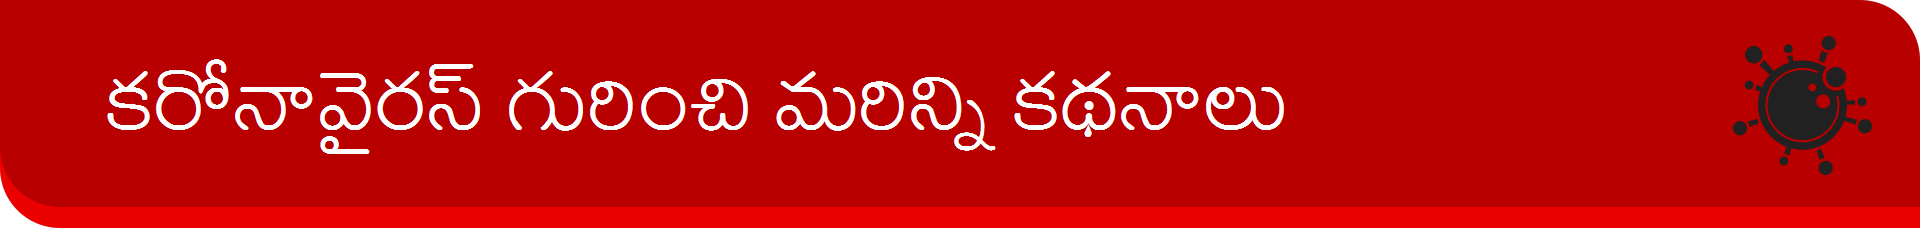 BBC News Telugu Banner కరోనావైరస్ గురించి మరిన్ని కథనాలు బ్యానర్ - బీబీసీ న్యూస్ తెలుగు